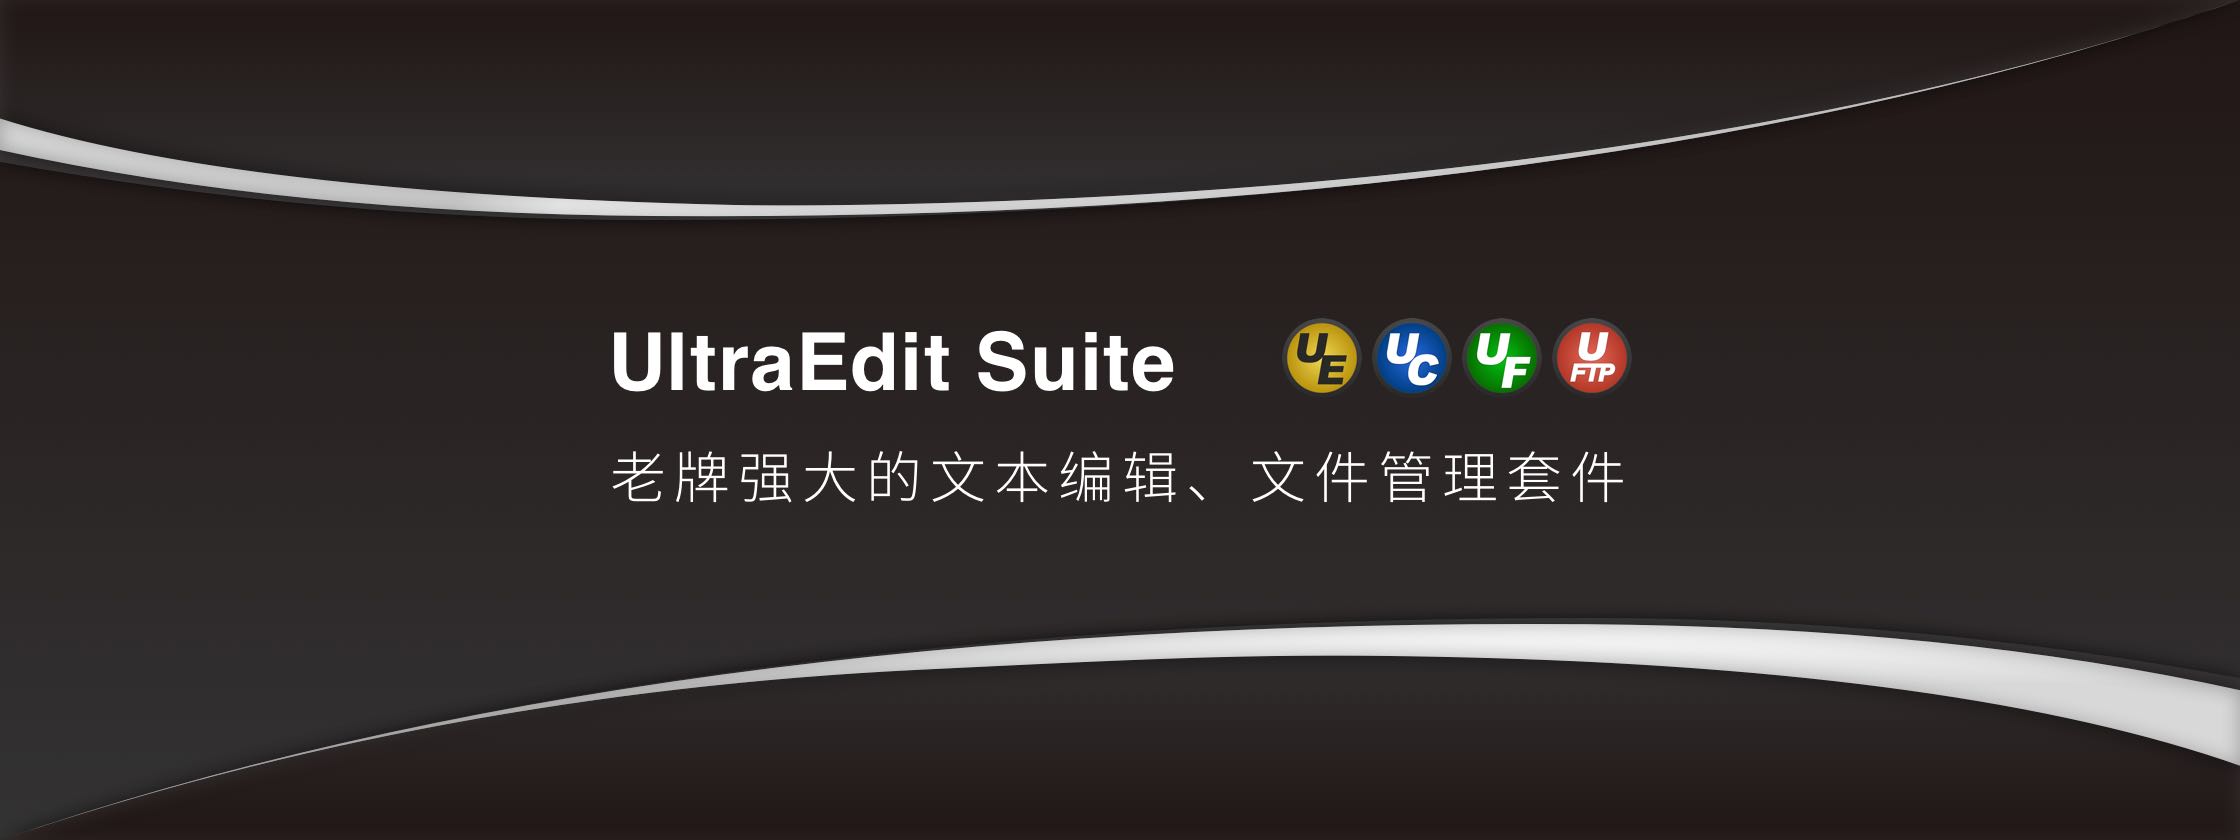 UltraEdit Suite，老牌强大的文本编辑、文件管理套件